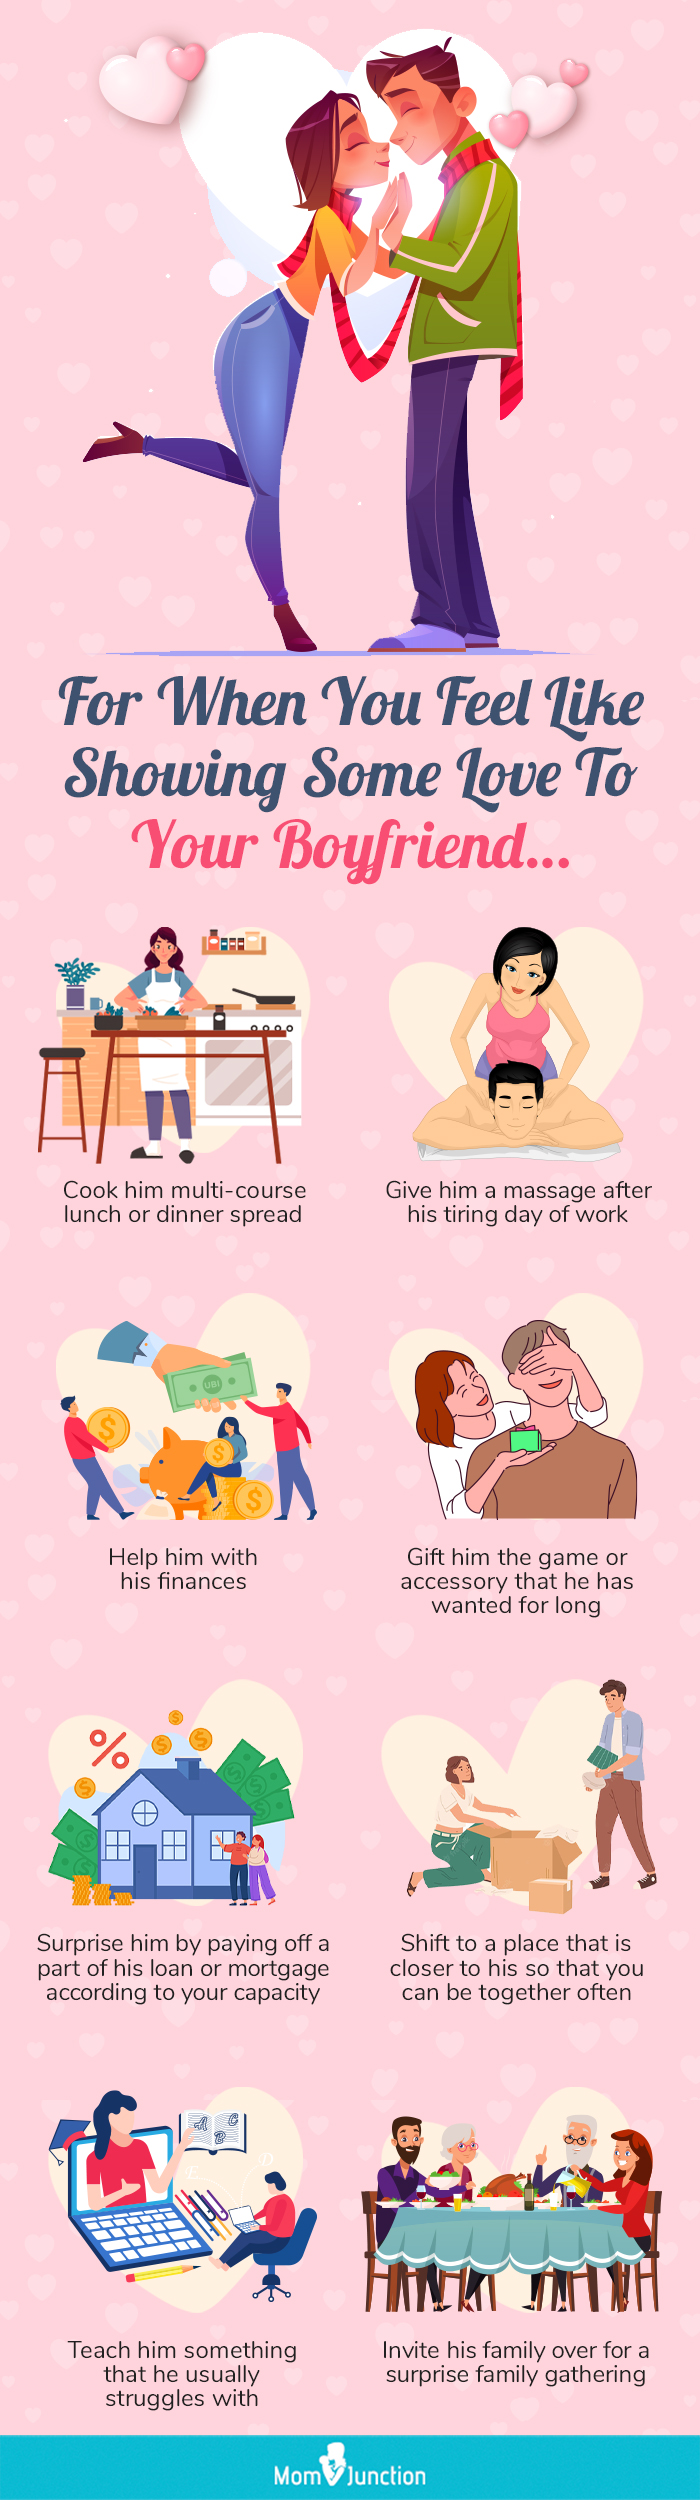 How To Apologize To Your Boyfriend: 15 Ways